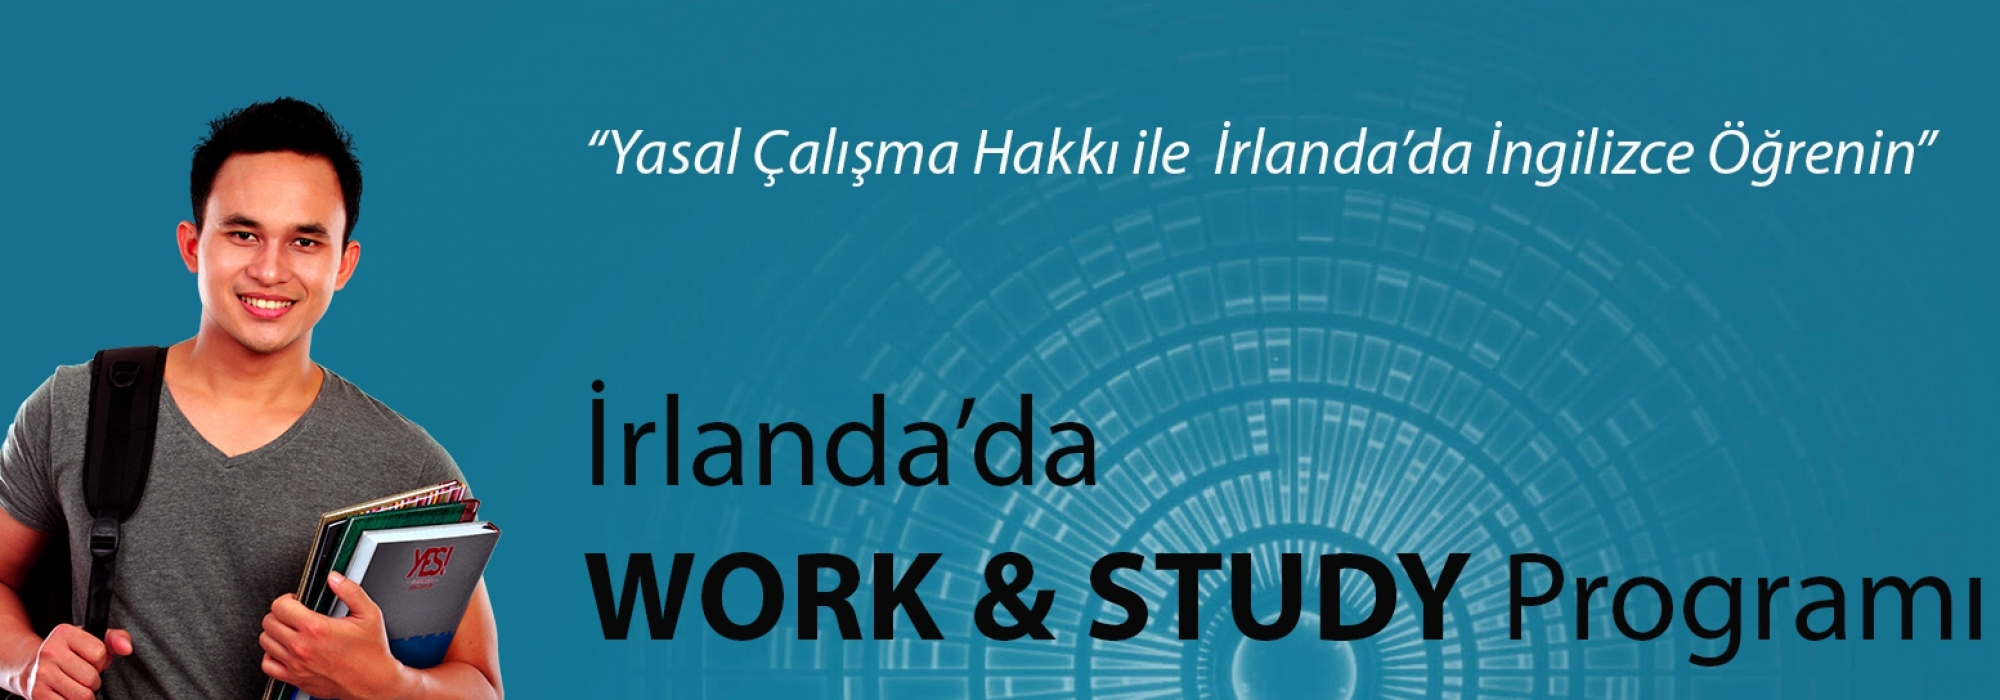 İrlanda'da WORK & STUDY programı